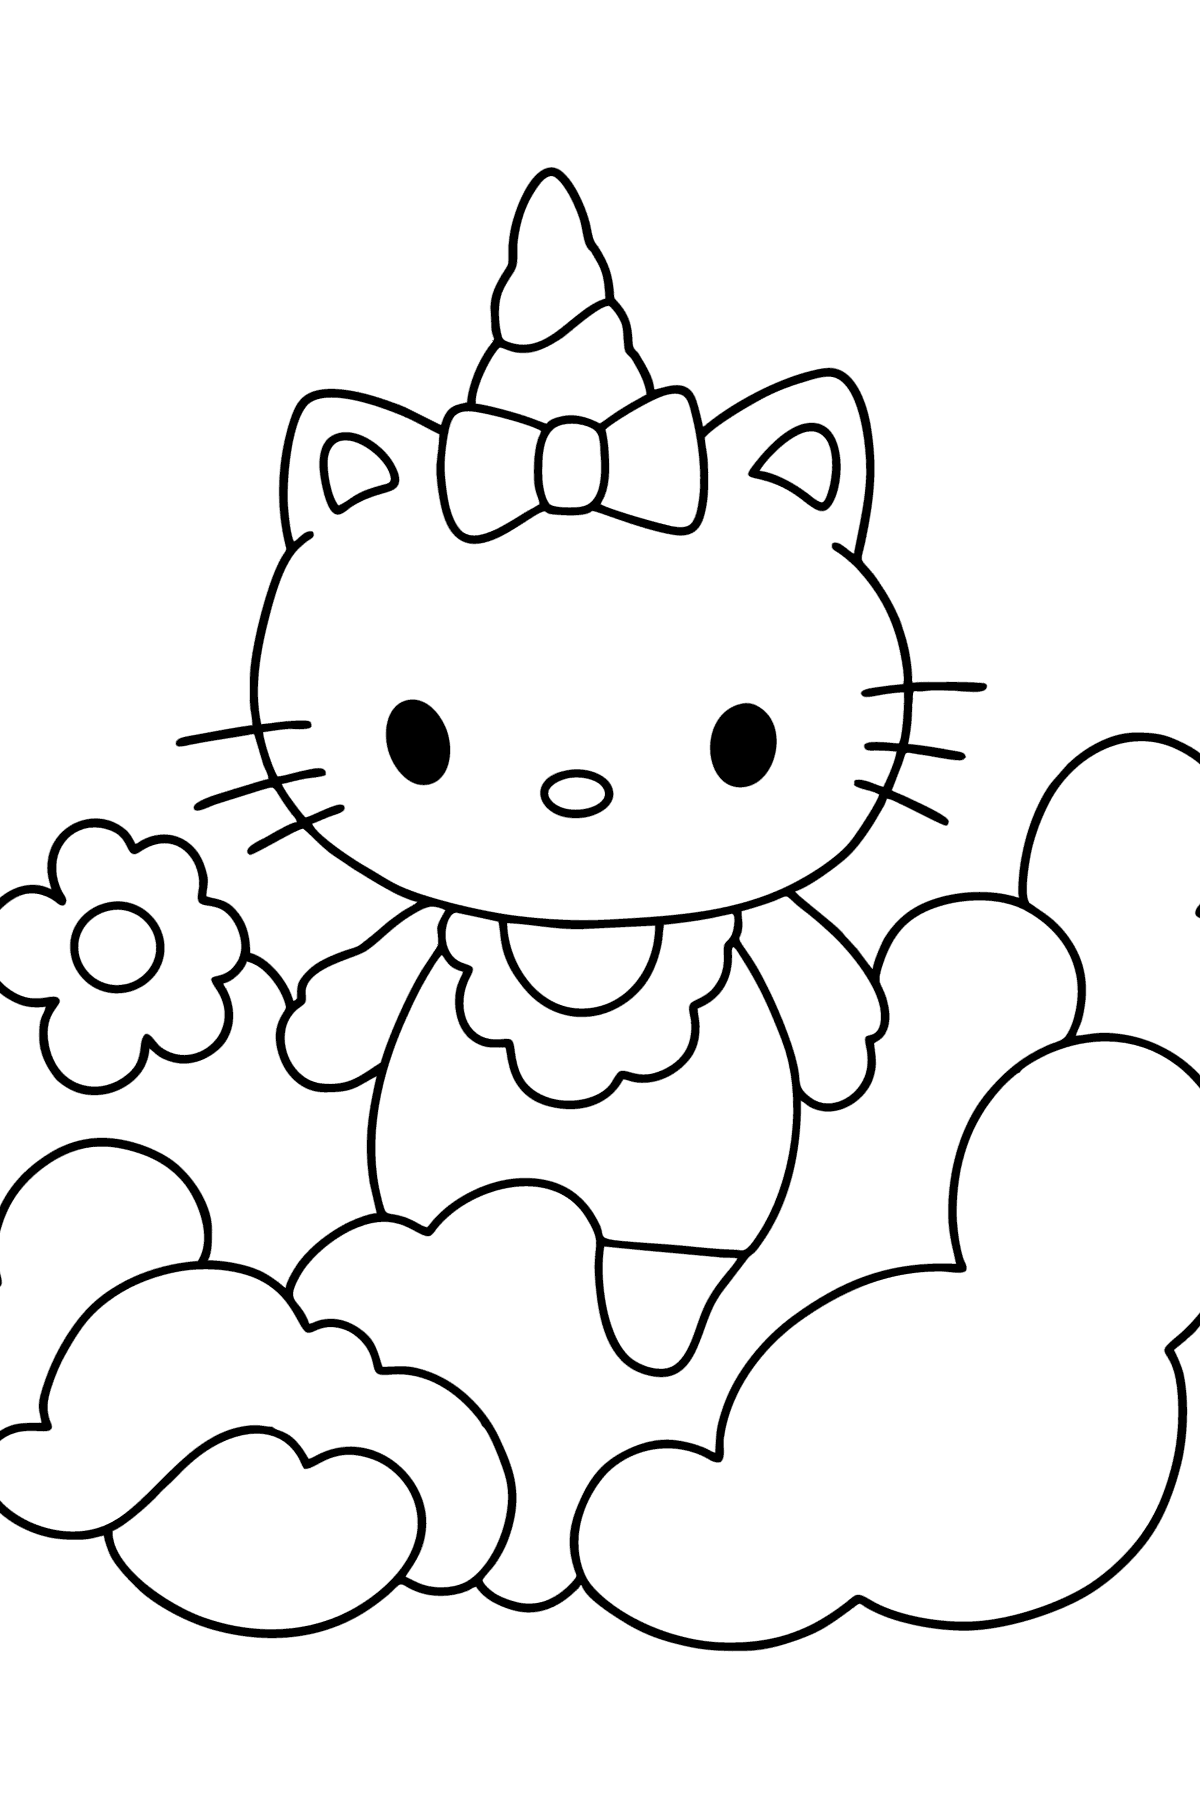 Dibujo de Hello Kitty Unicornio para colorear - Dibujos para Colorear para Niños